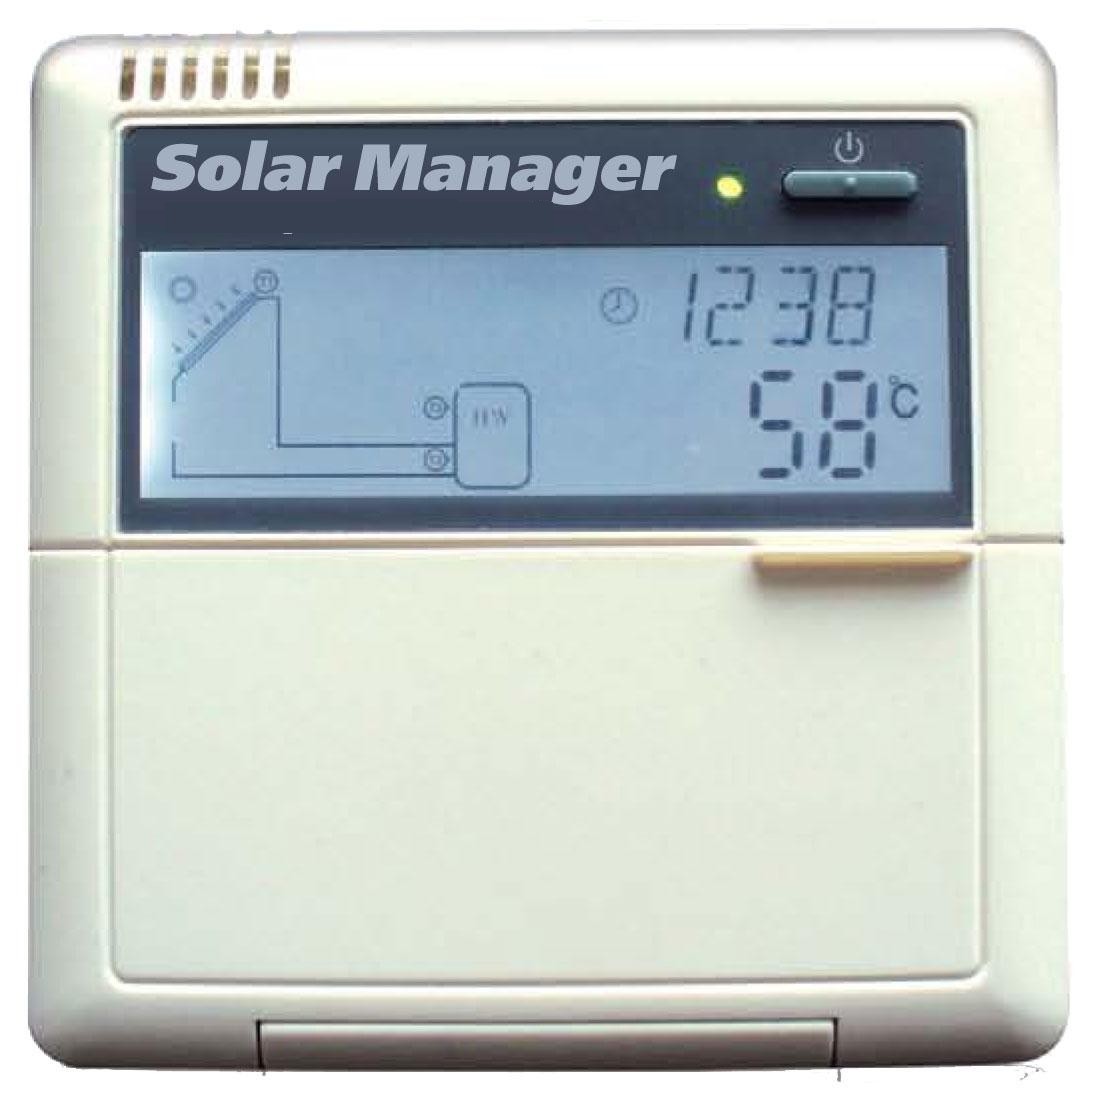 Solarsteuerung Solar Manager